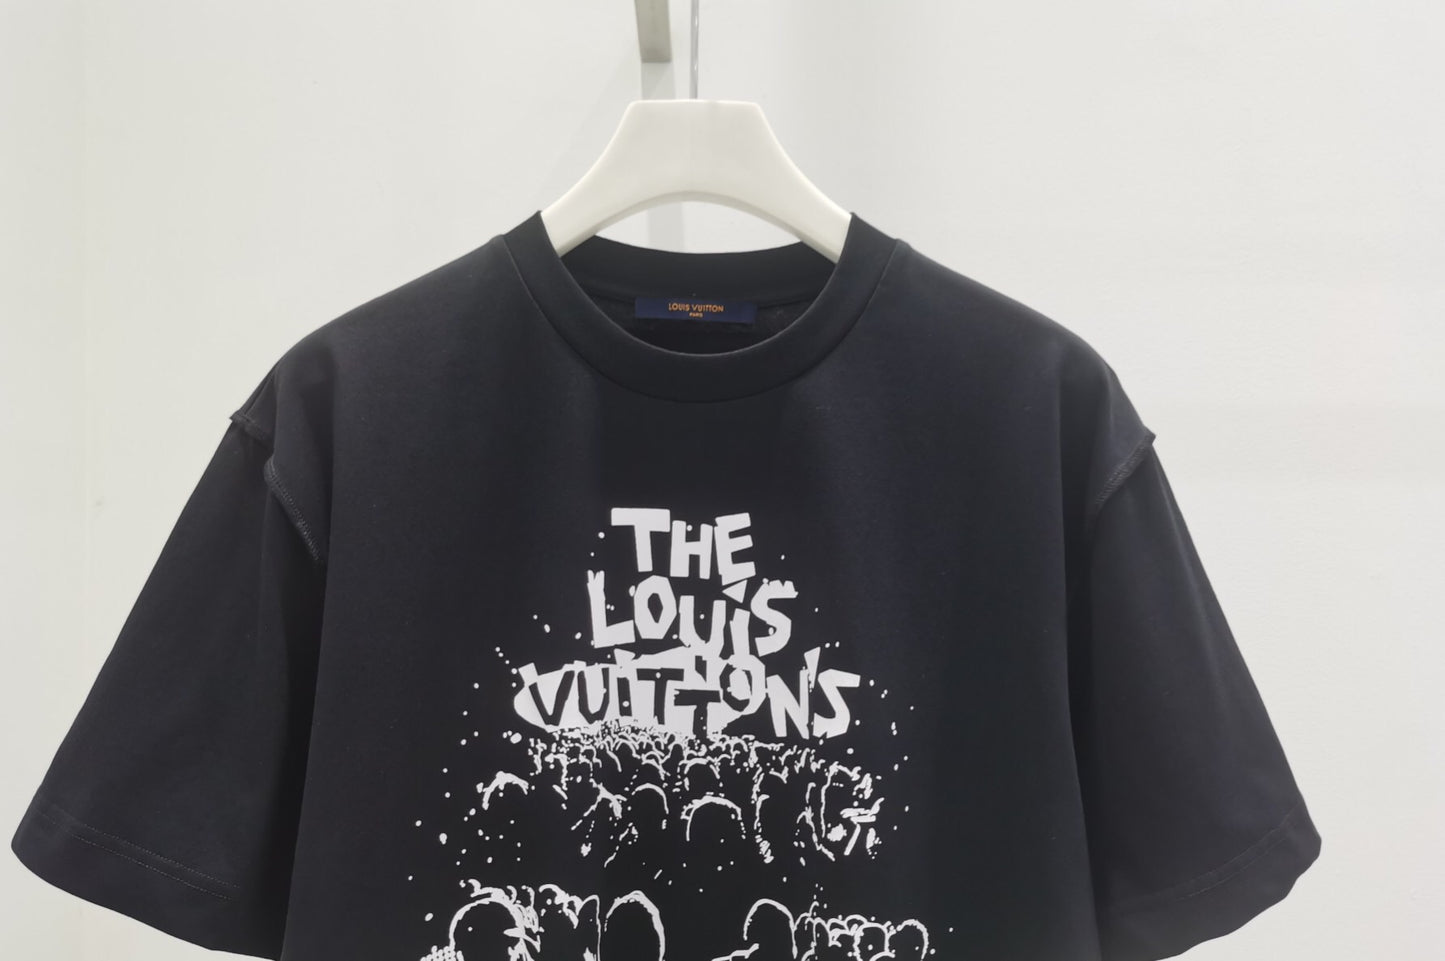 LV Black T-Shirt